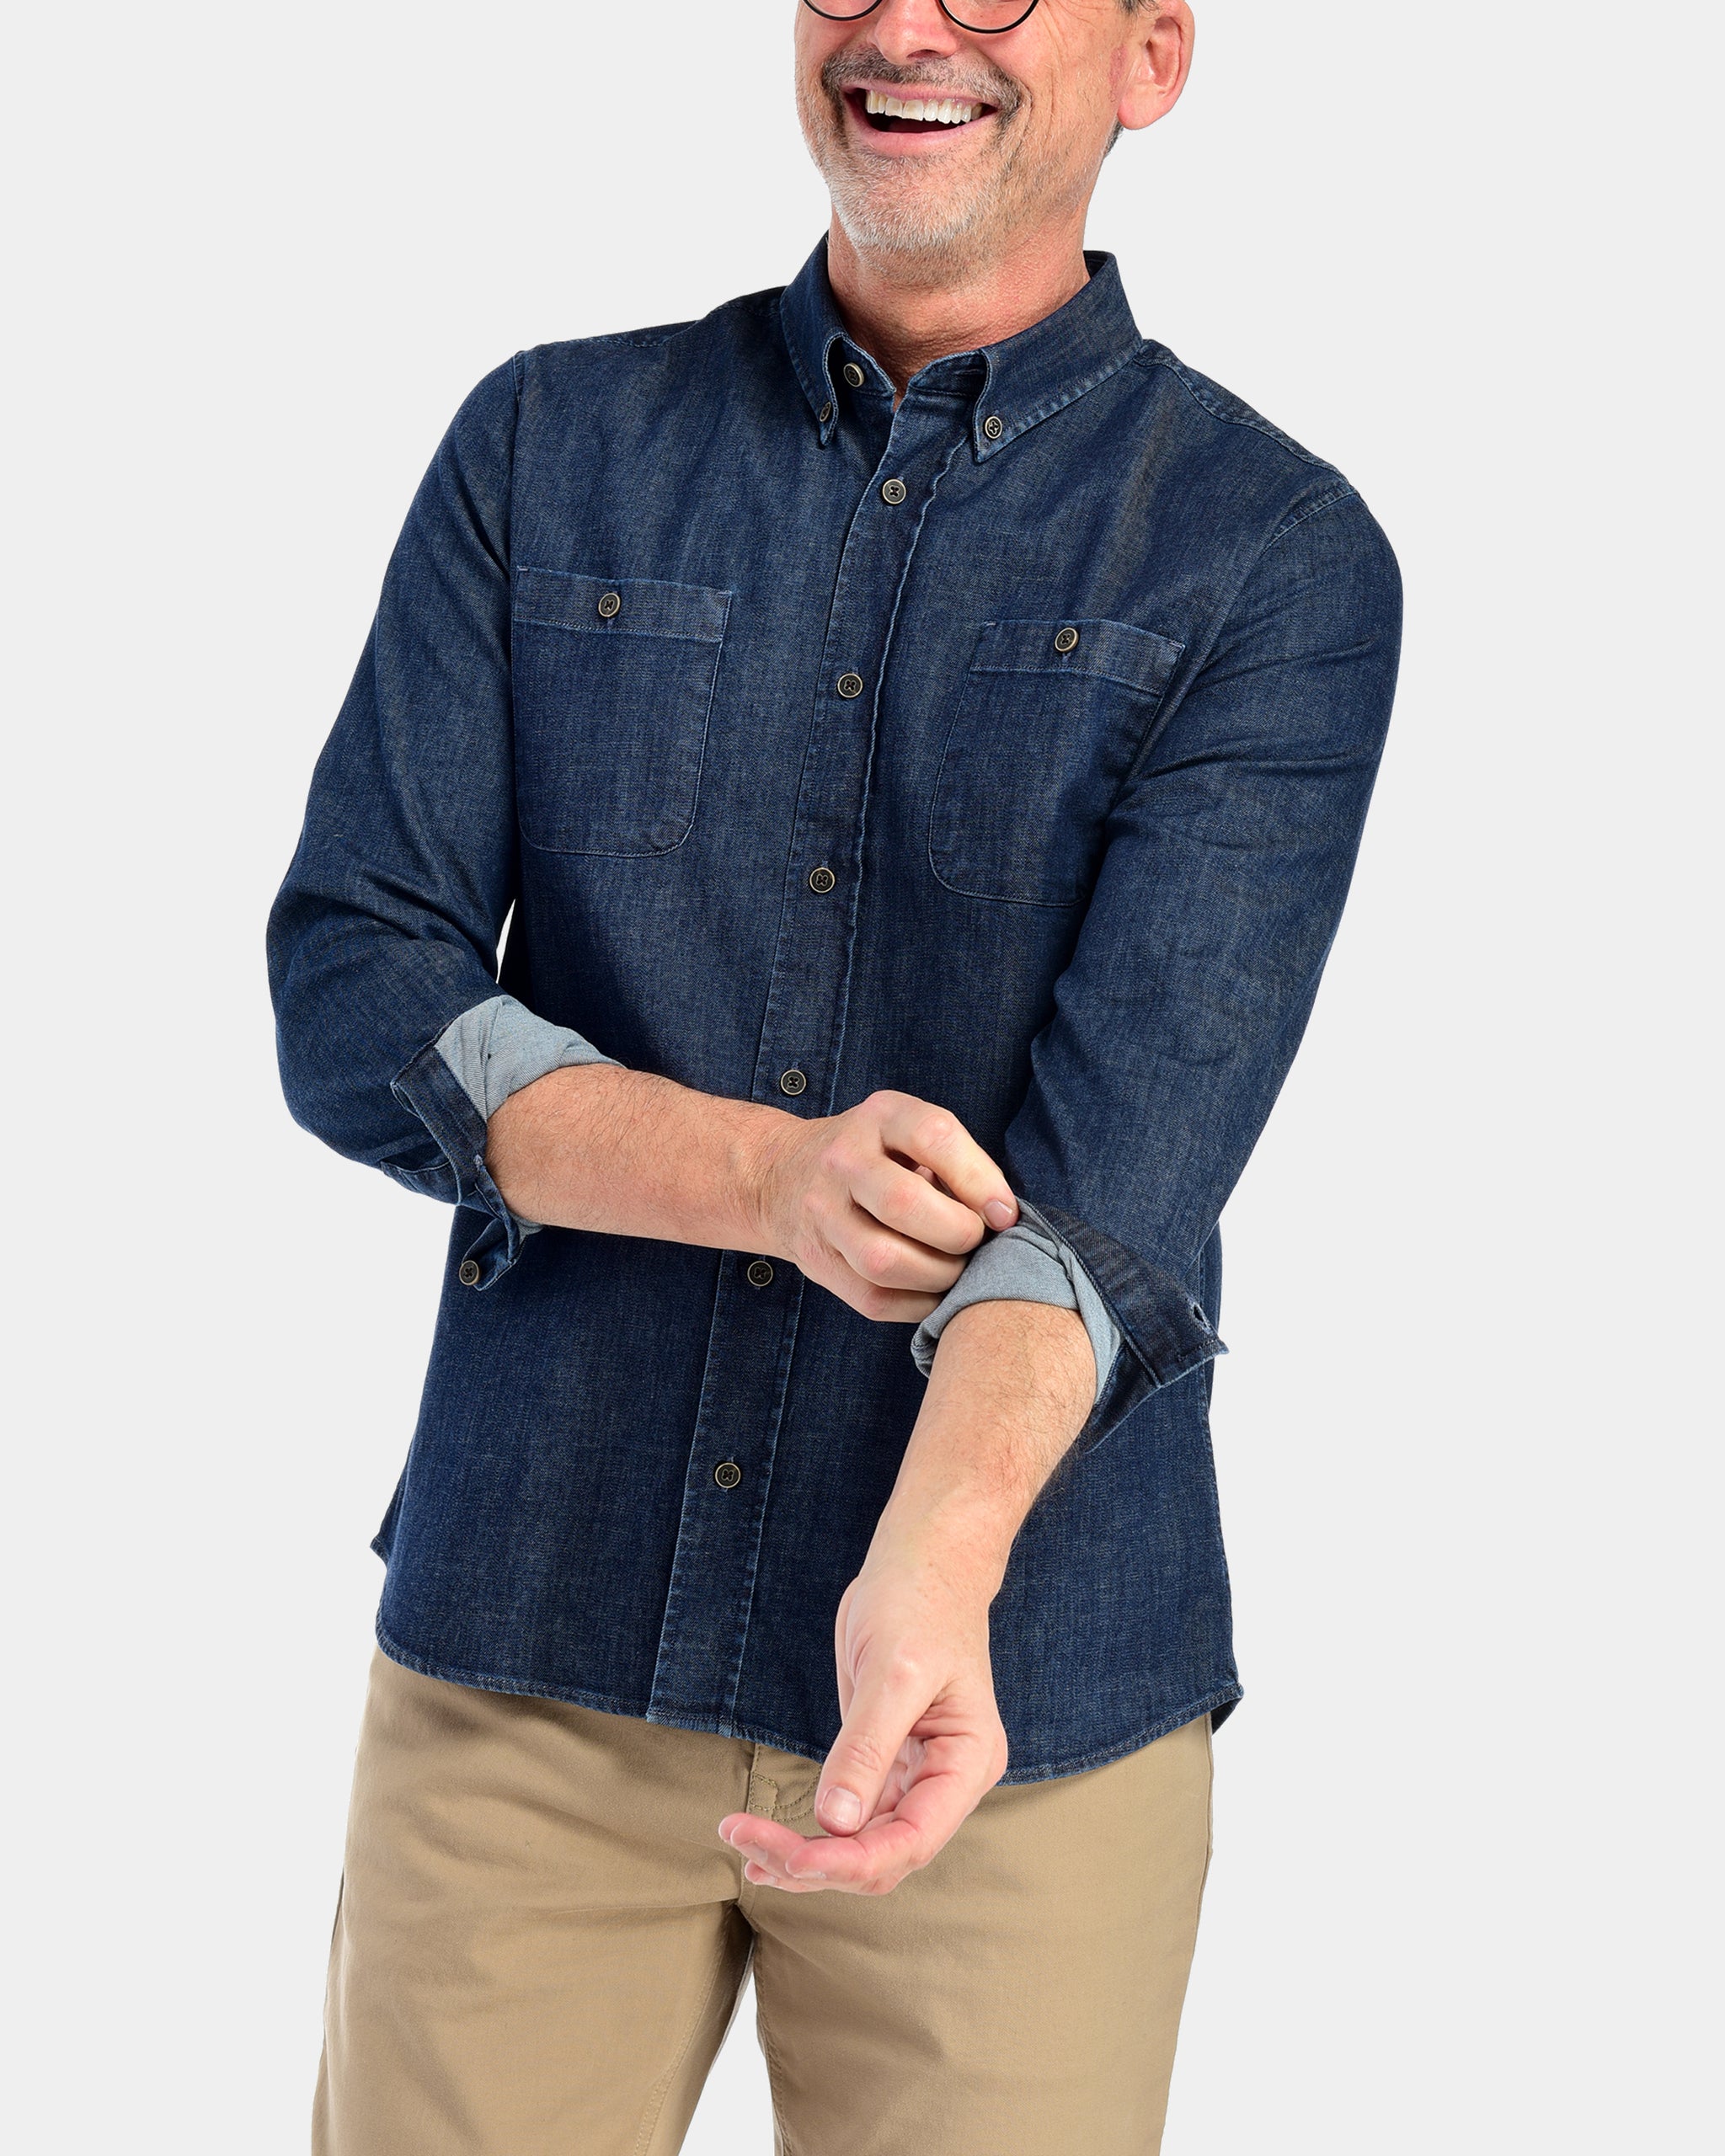 Men's Long Sleeve Button Down Pattern Shirt Tanner Shirt by Fisher